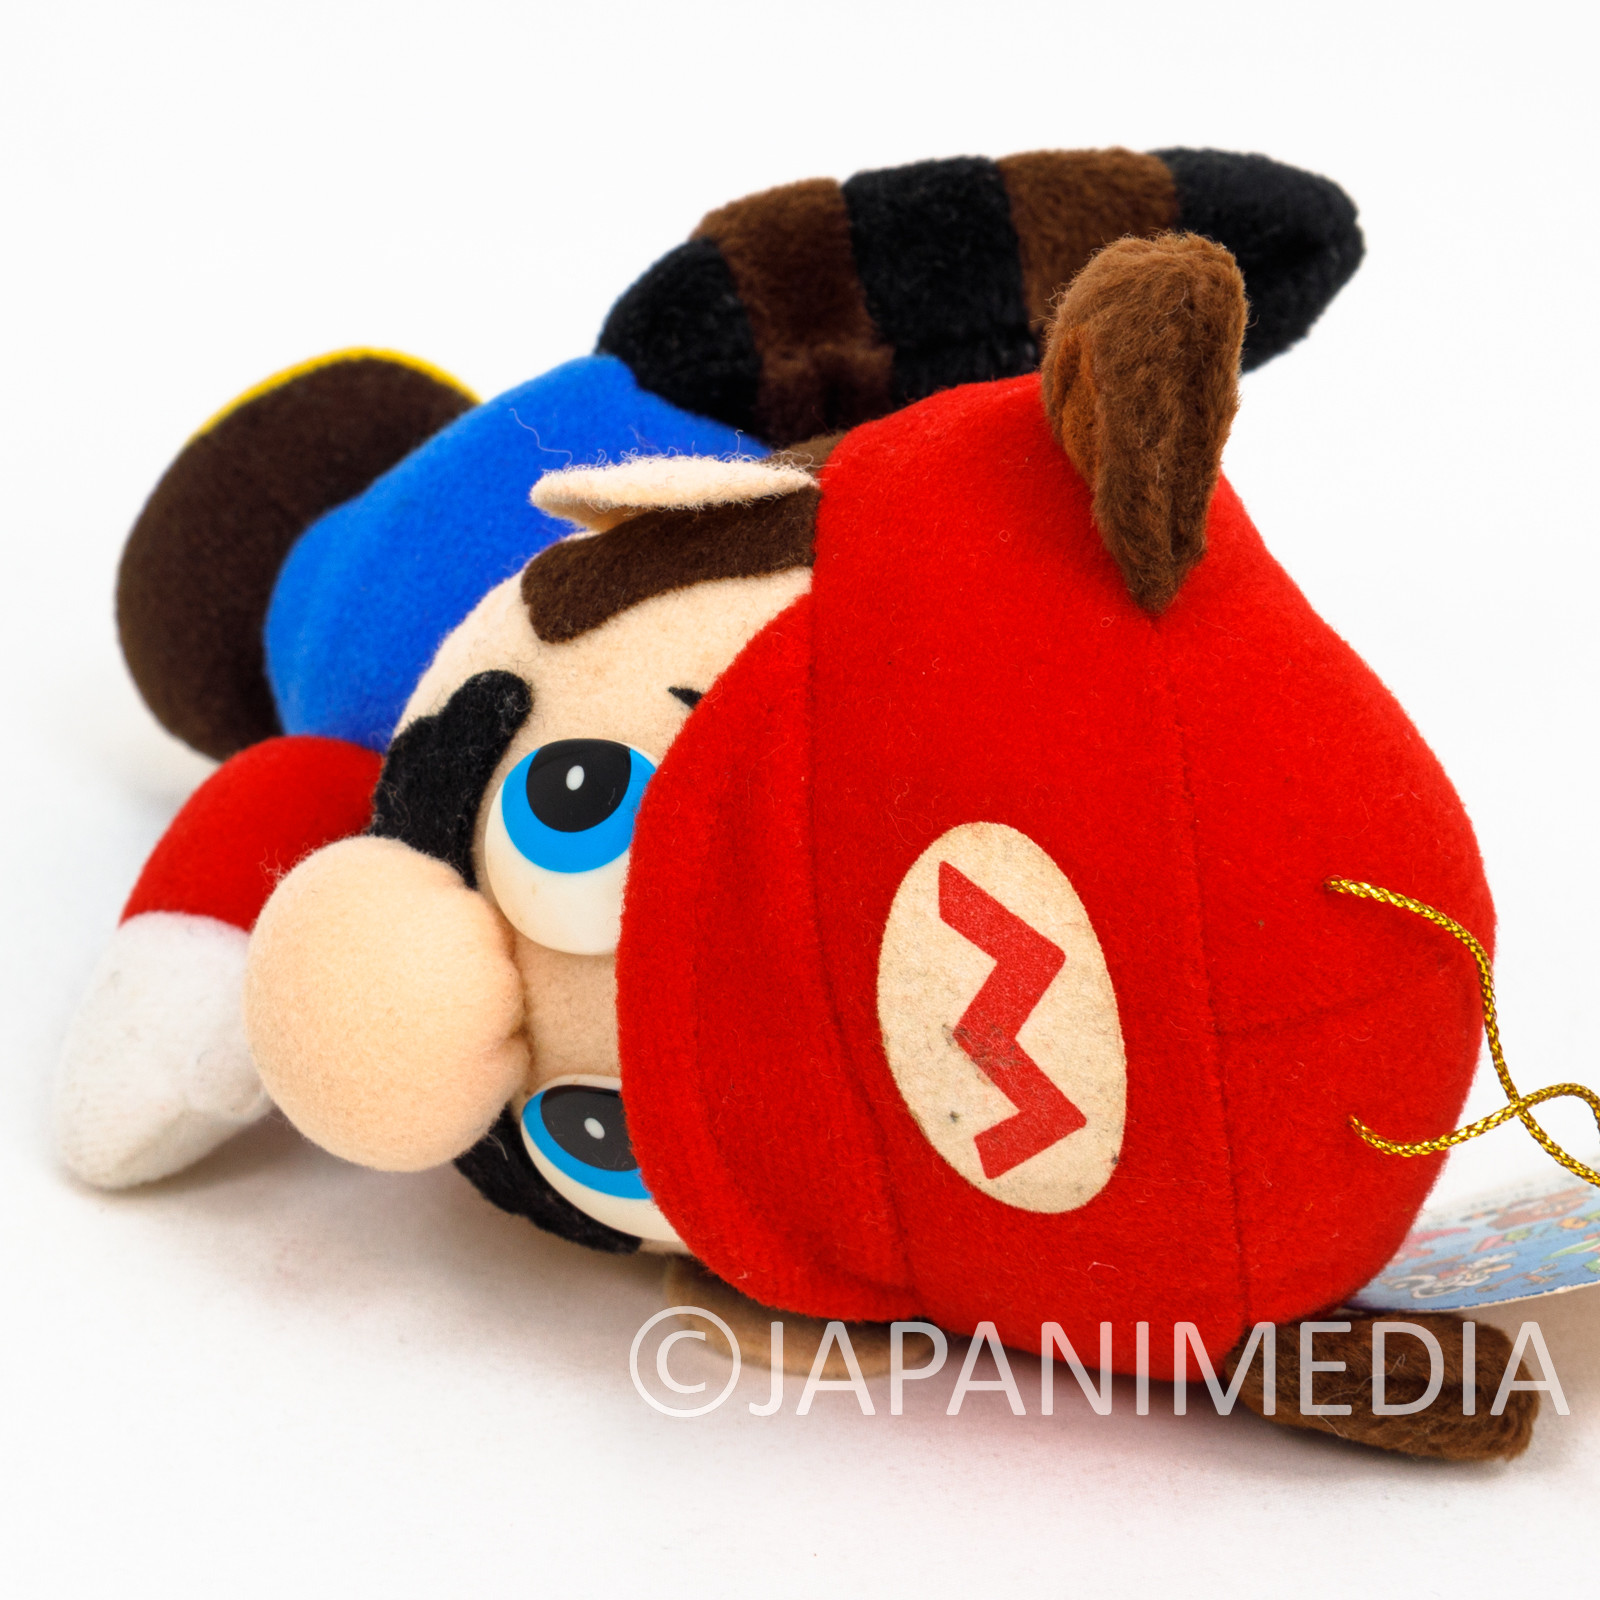 Retro Super Mario Racoon Mario Plush Doll Banpresto Nintendo Famicom SNES